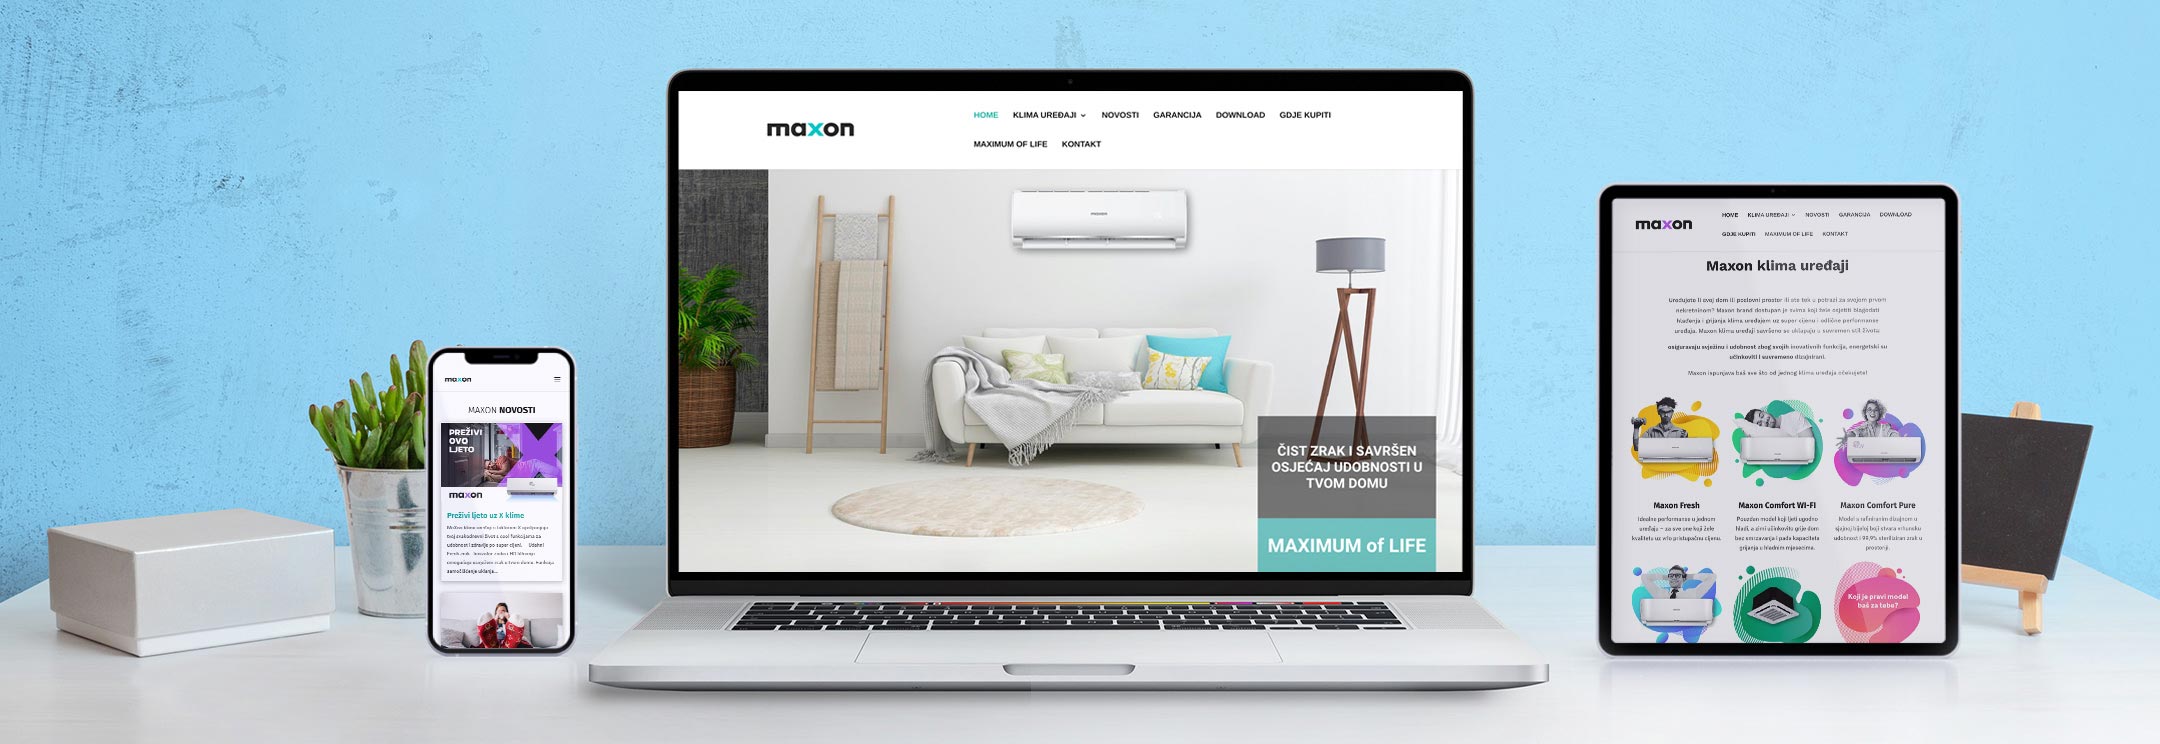 maxon klima dizajn stranica web design